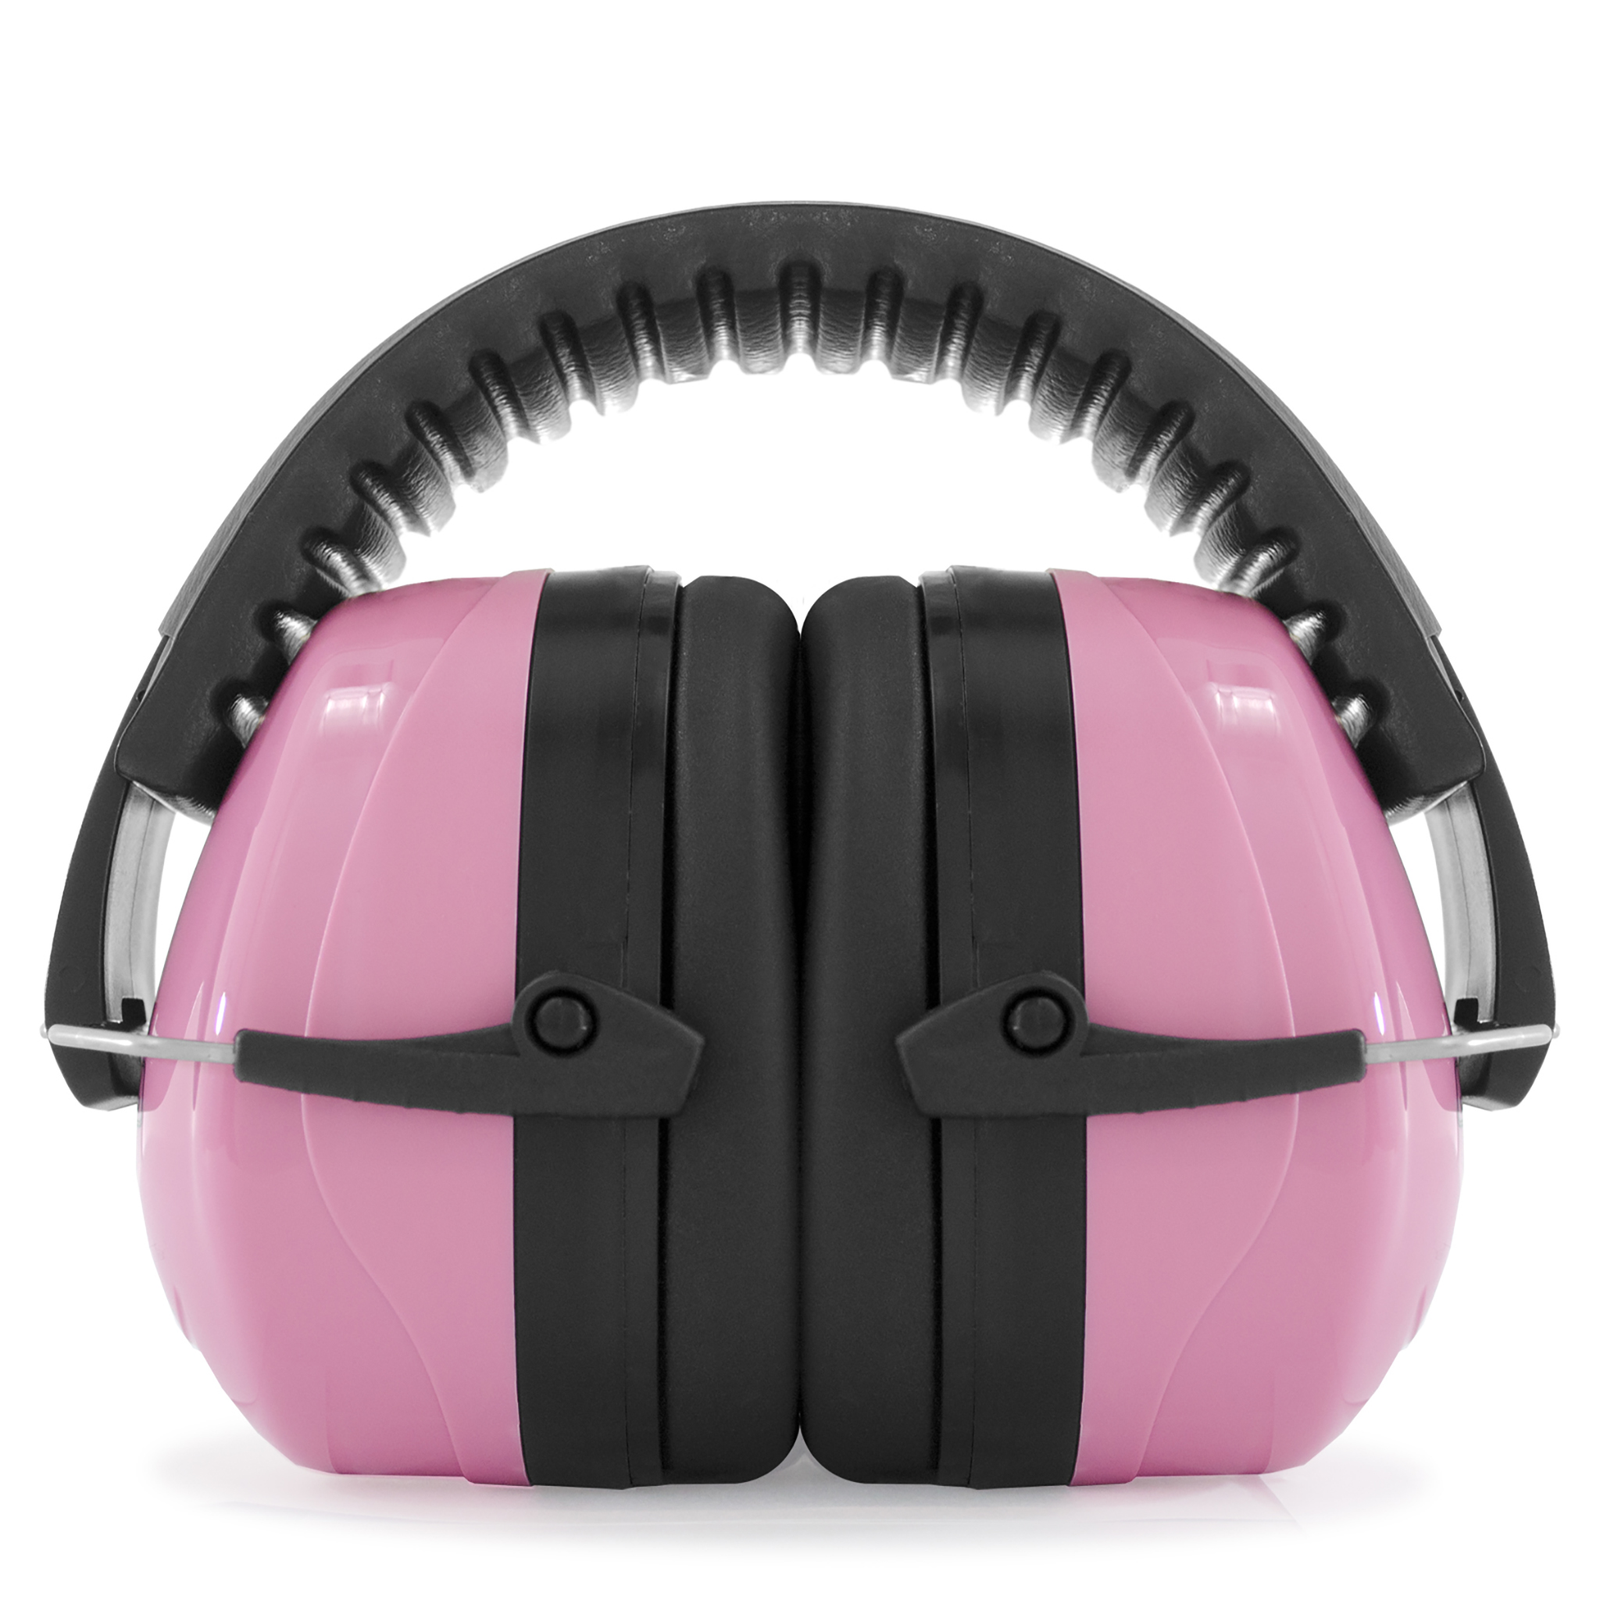 DECITECH™ E1 Active Electronic Hearing Protection, Over the Head Earmuffs